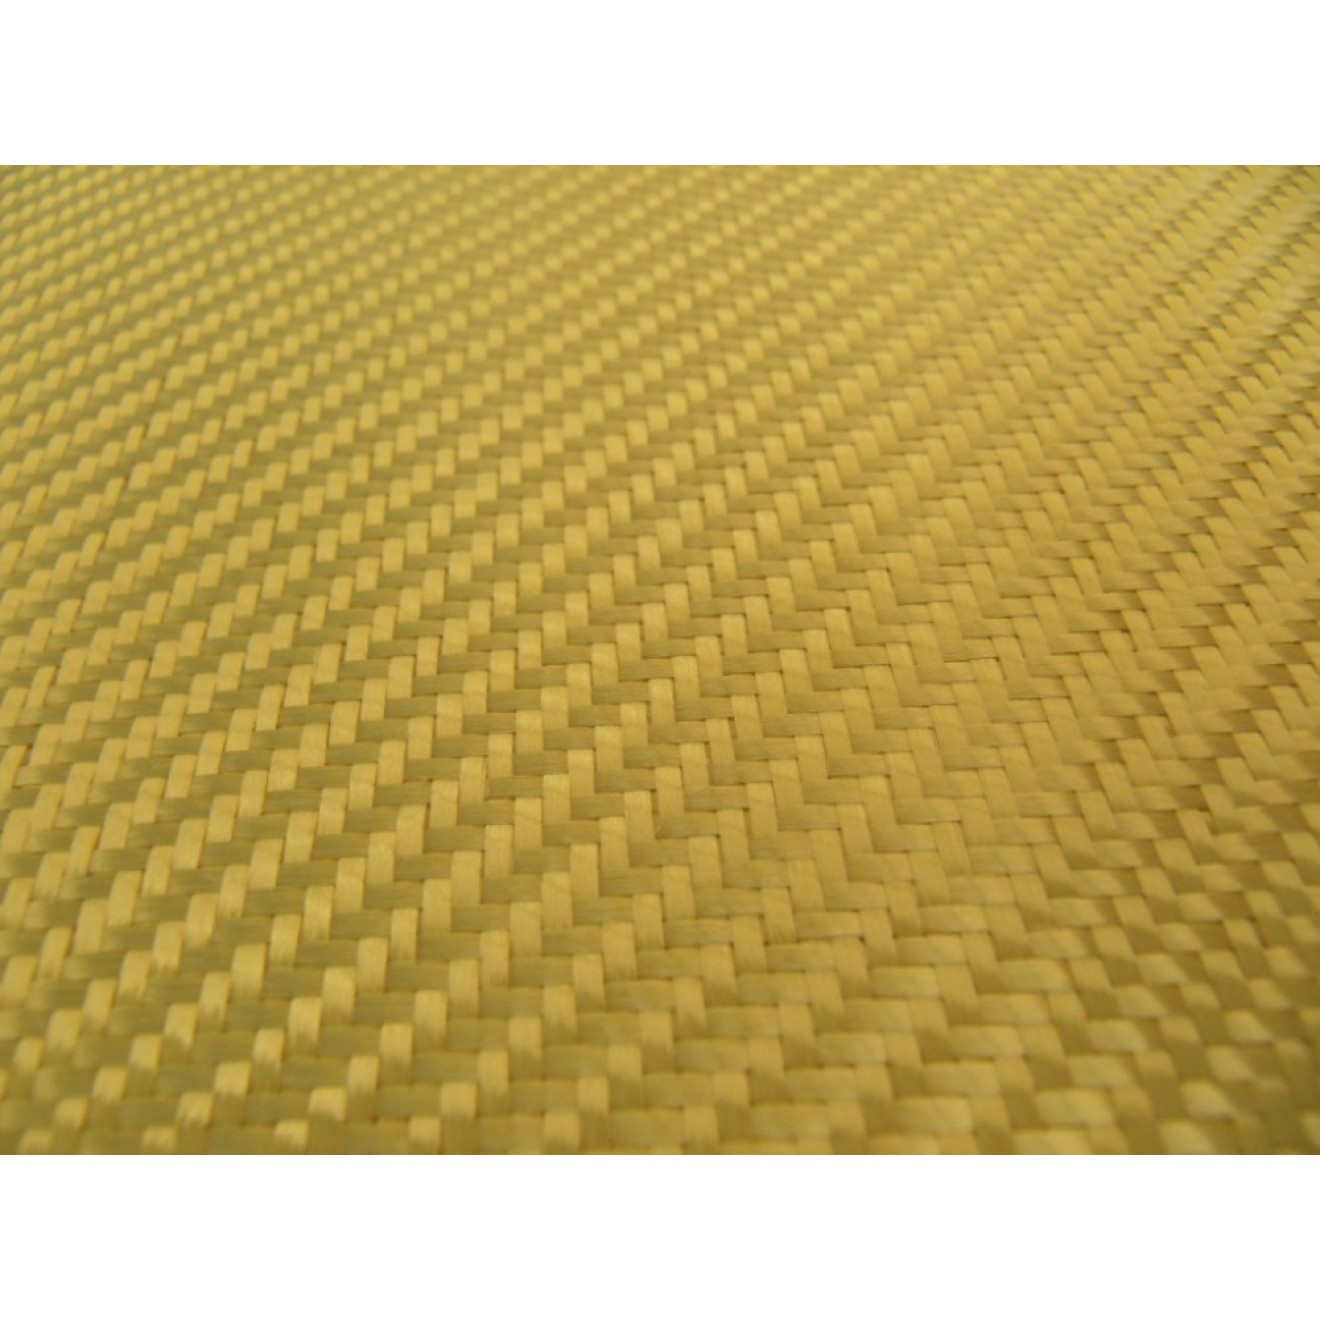 Woven aramide fiber fabric 170g/m² twill 2/2, width 100cm, roll length 100m